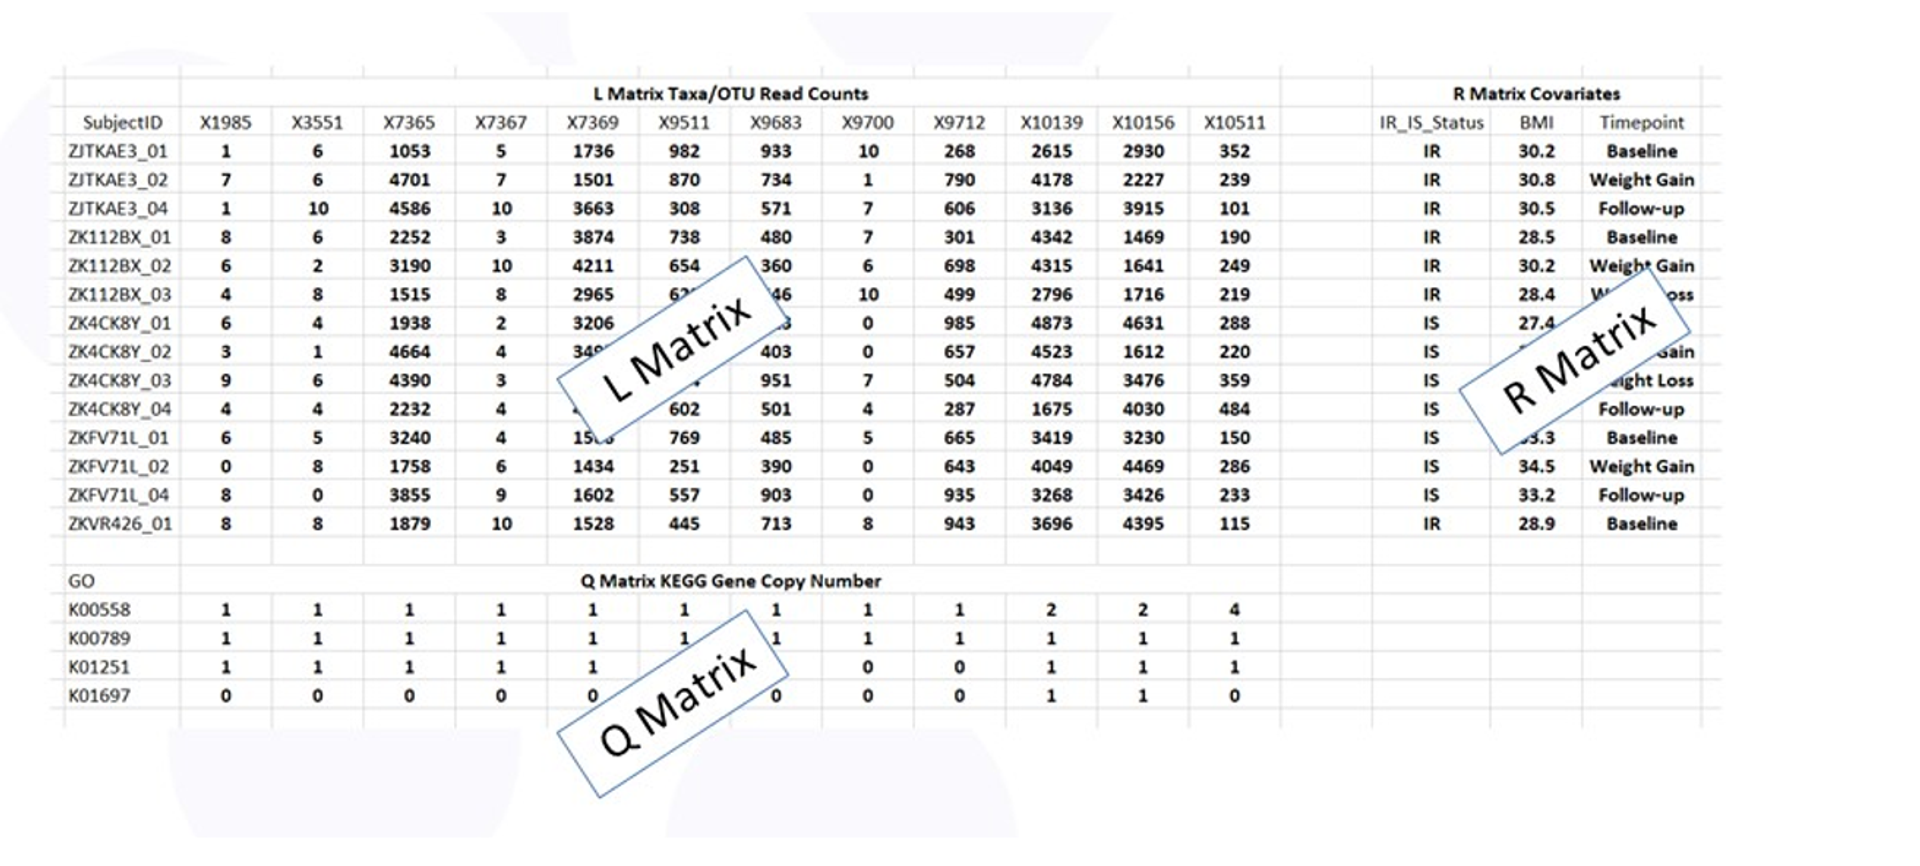 Data tables for RLQ analysis